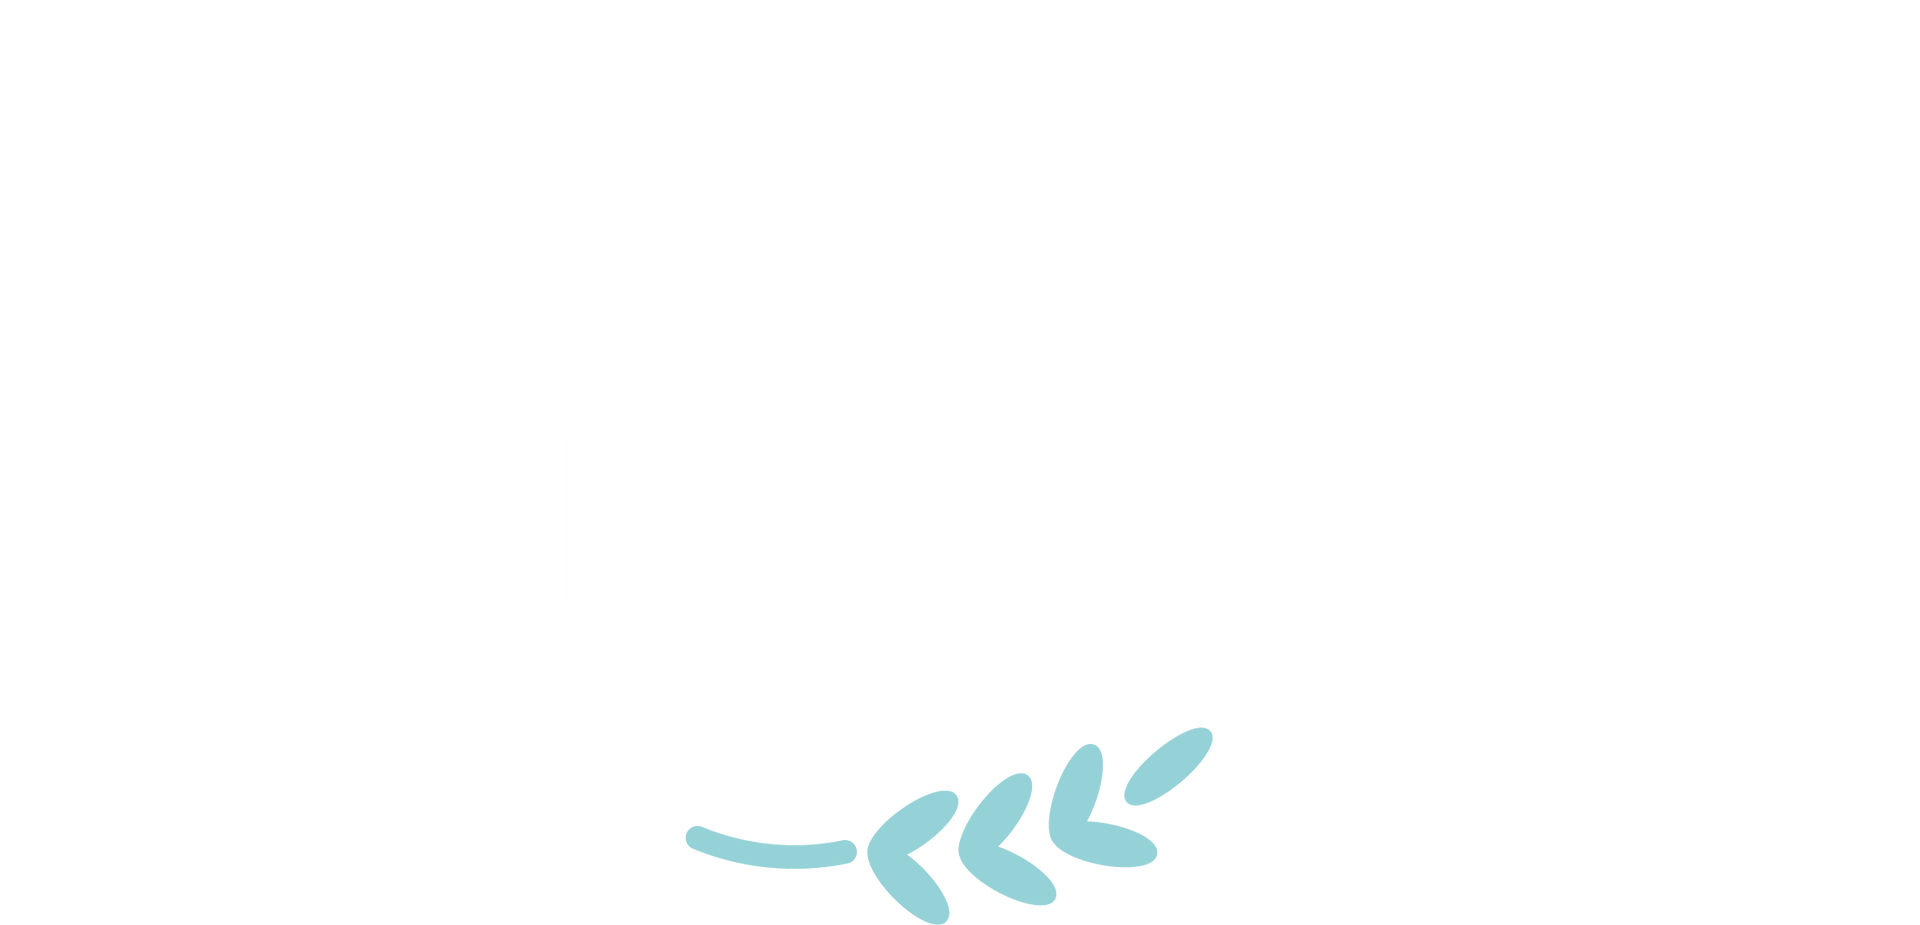 Aging Care Management Logo